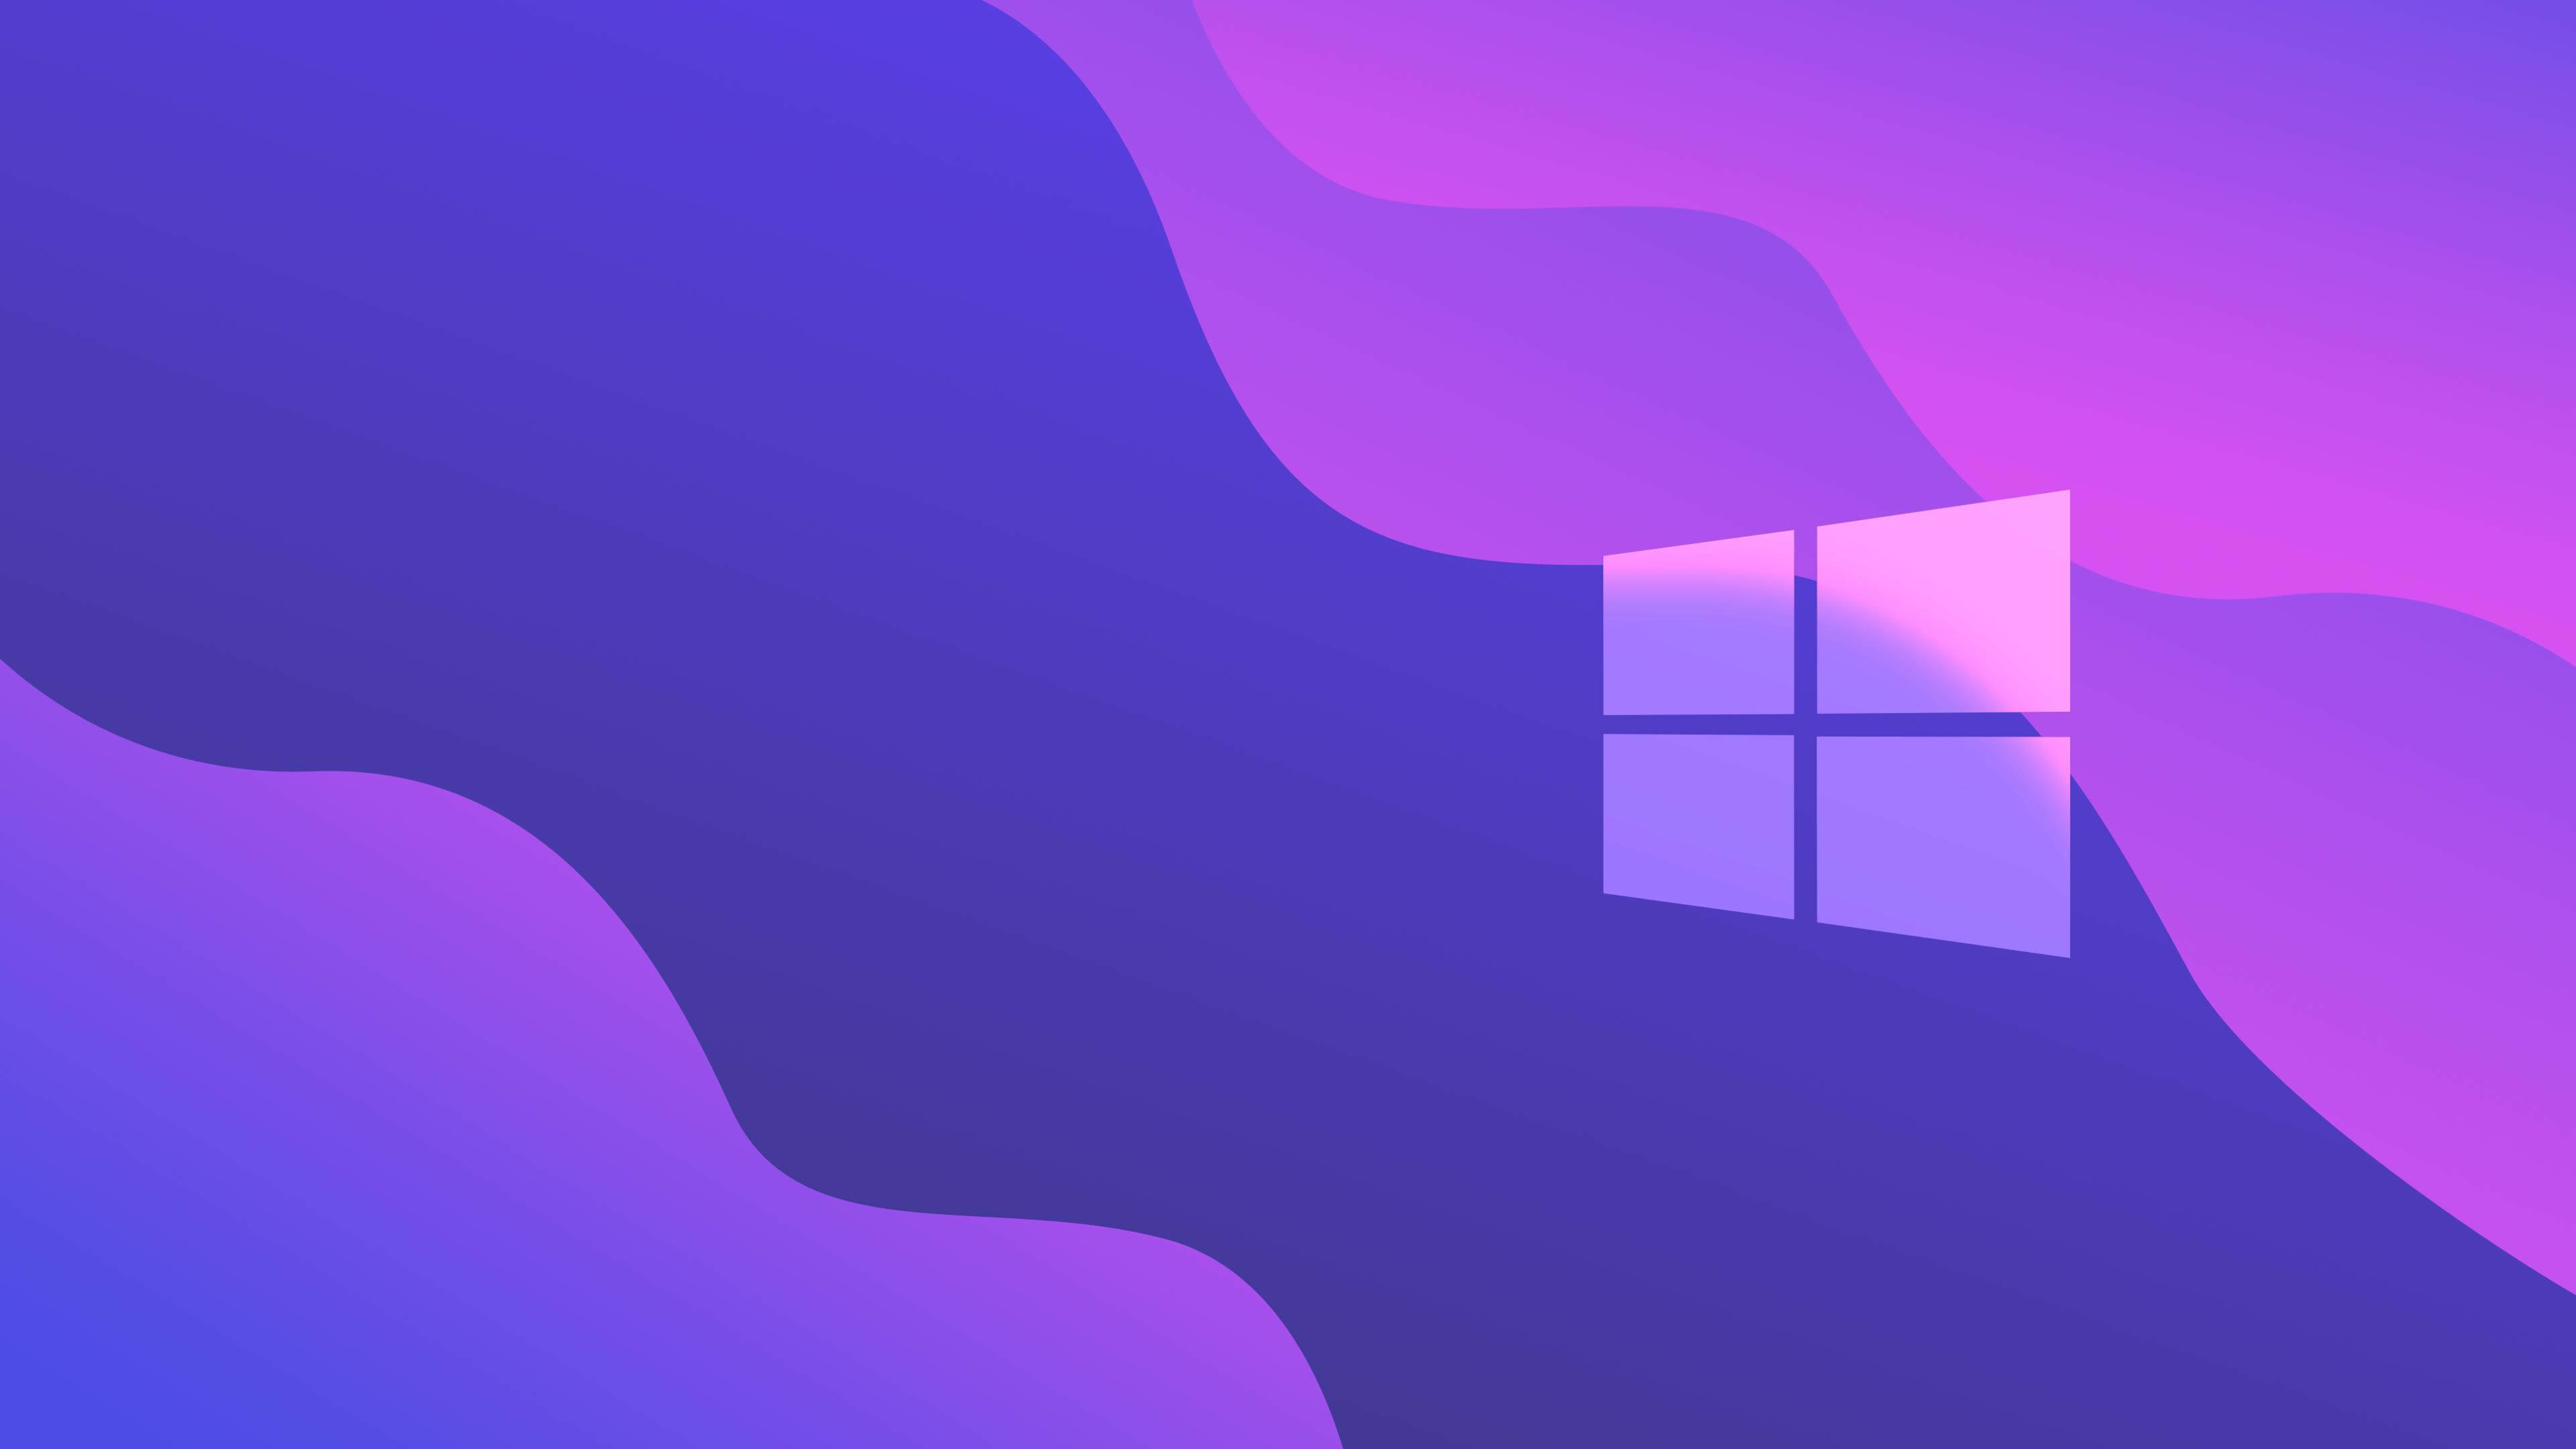 7680x4320 Windows 10 Purple Gradient 8K Wallpaper, HD Minimalist 4K  Wallpapers, Images, Photos and Background - Wallpapers Den